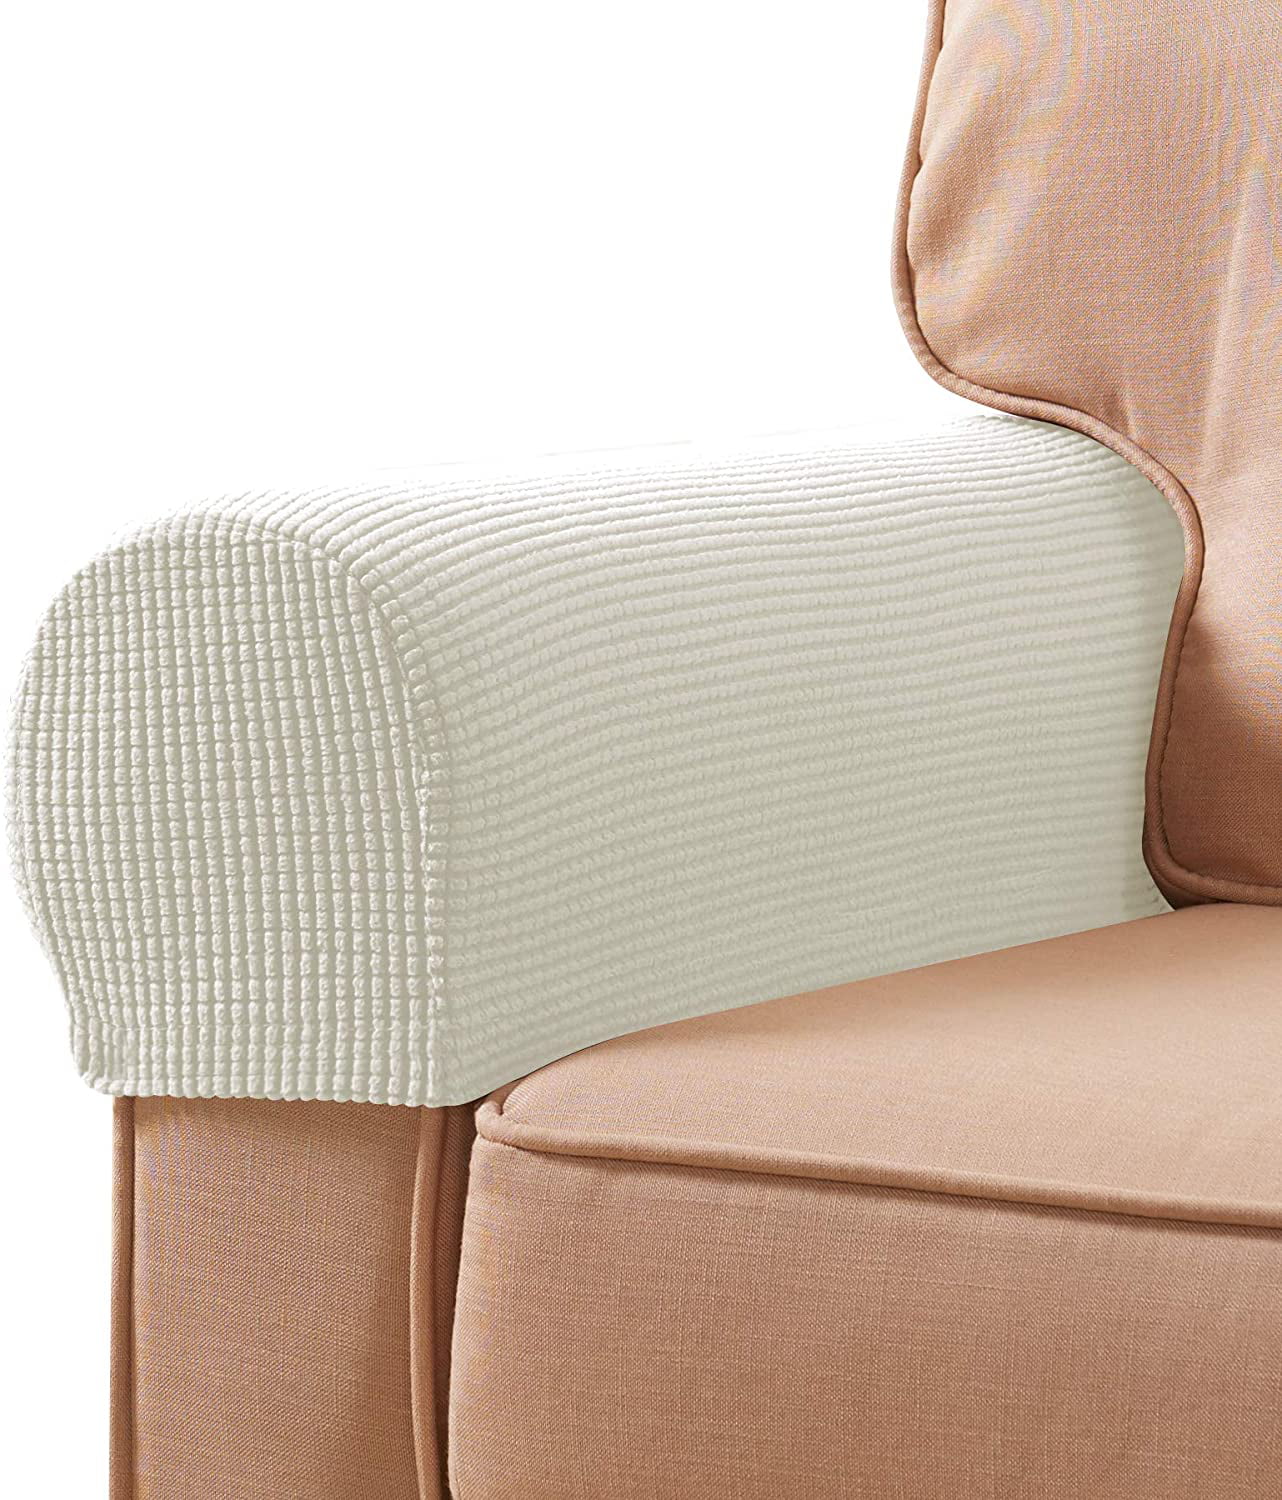 Details about   2pcs Premium Elastic Armrest Covers Fits for Most Sofa Arms,Soft Sofa Cover 